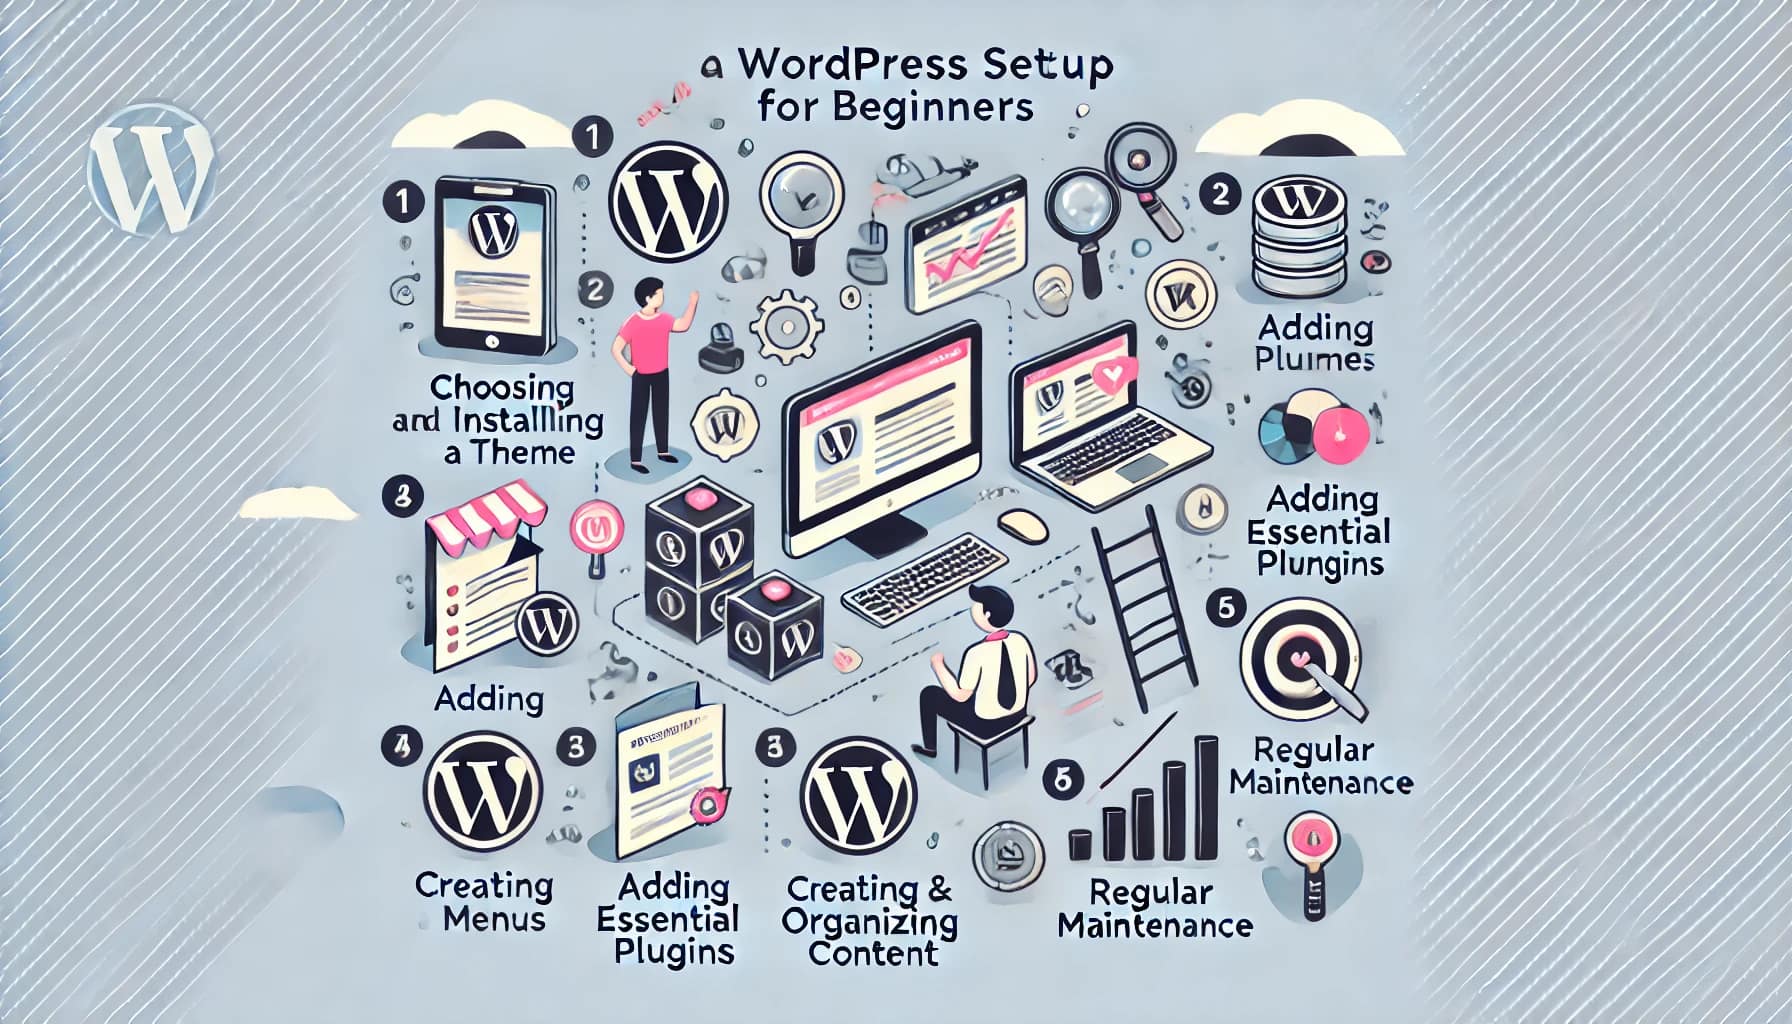 WordPress setup guide for beginners